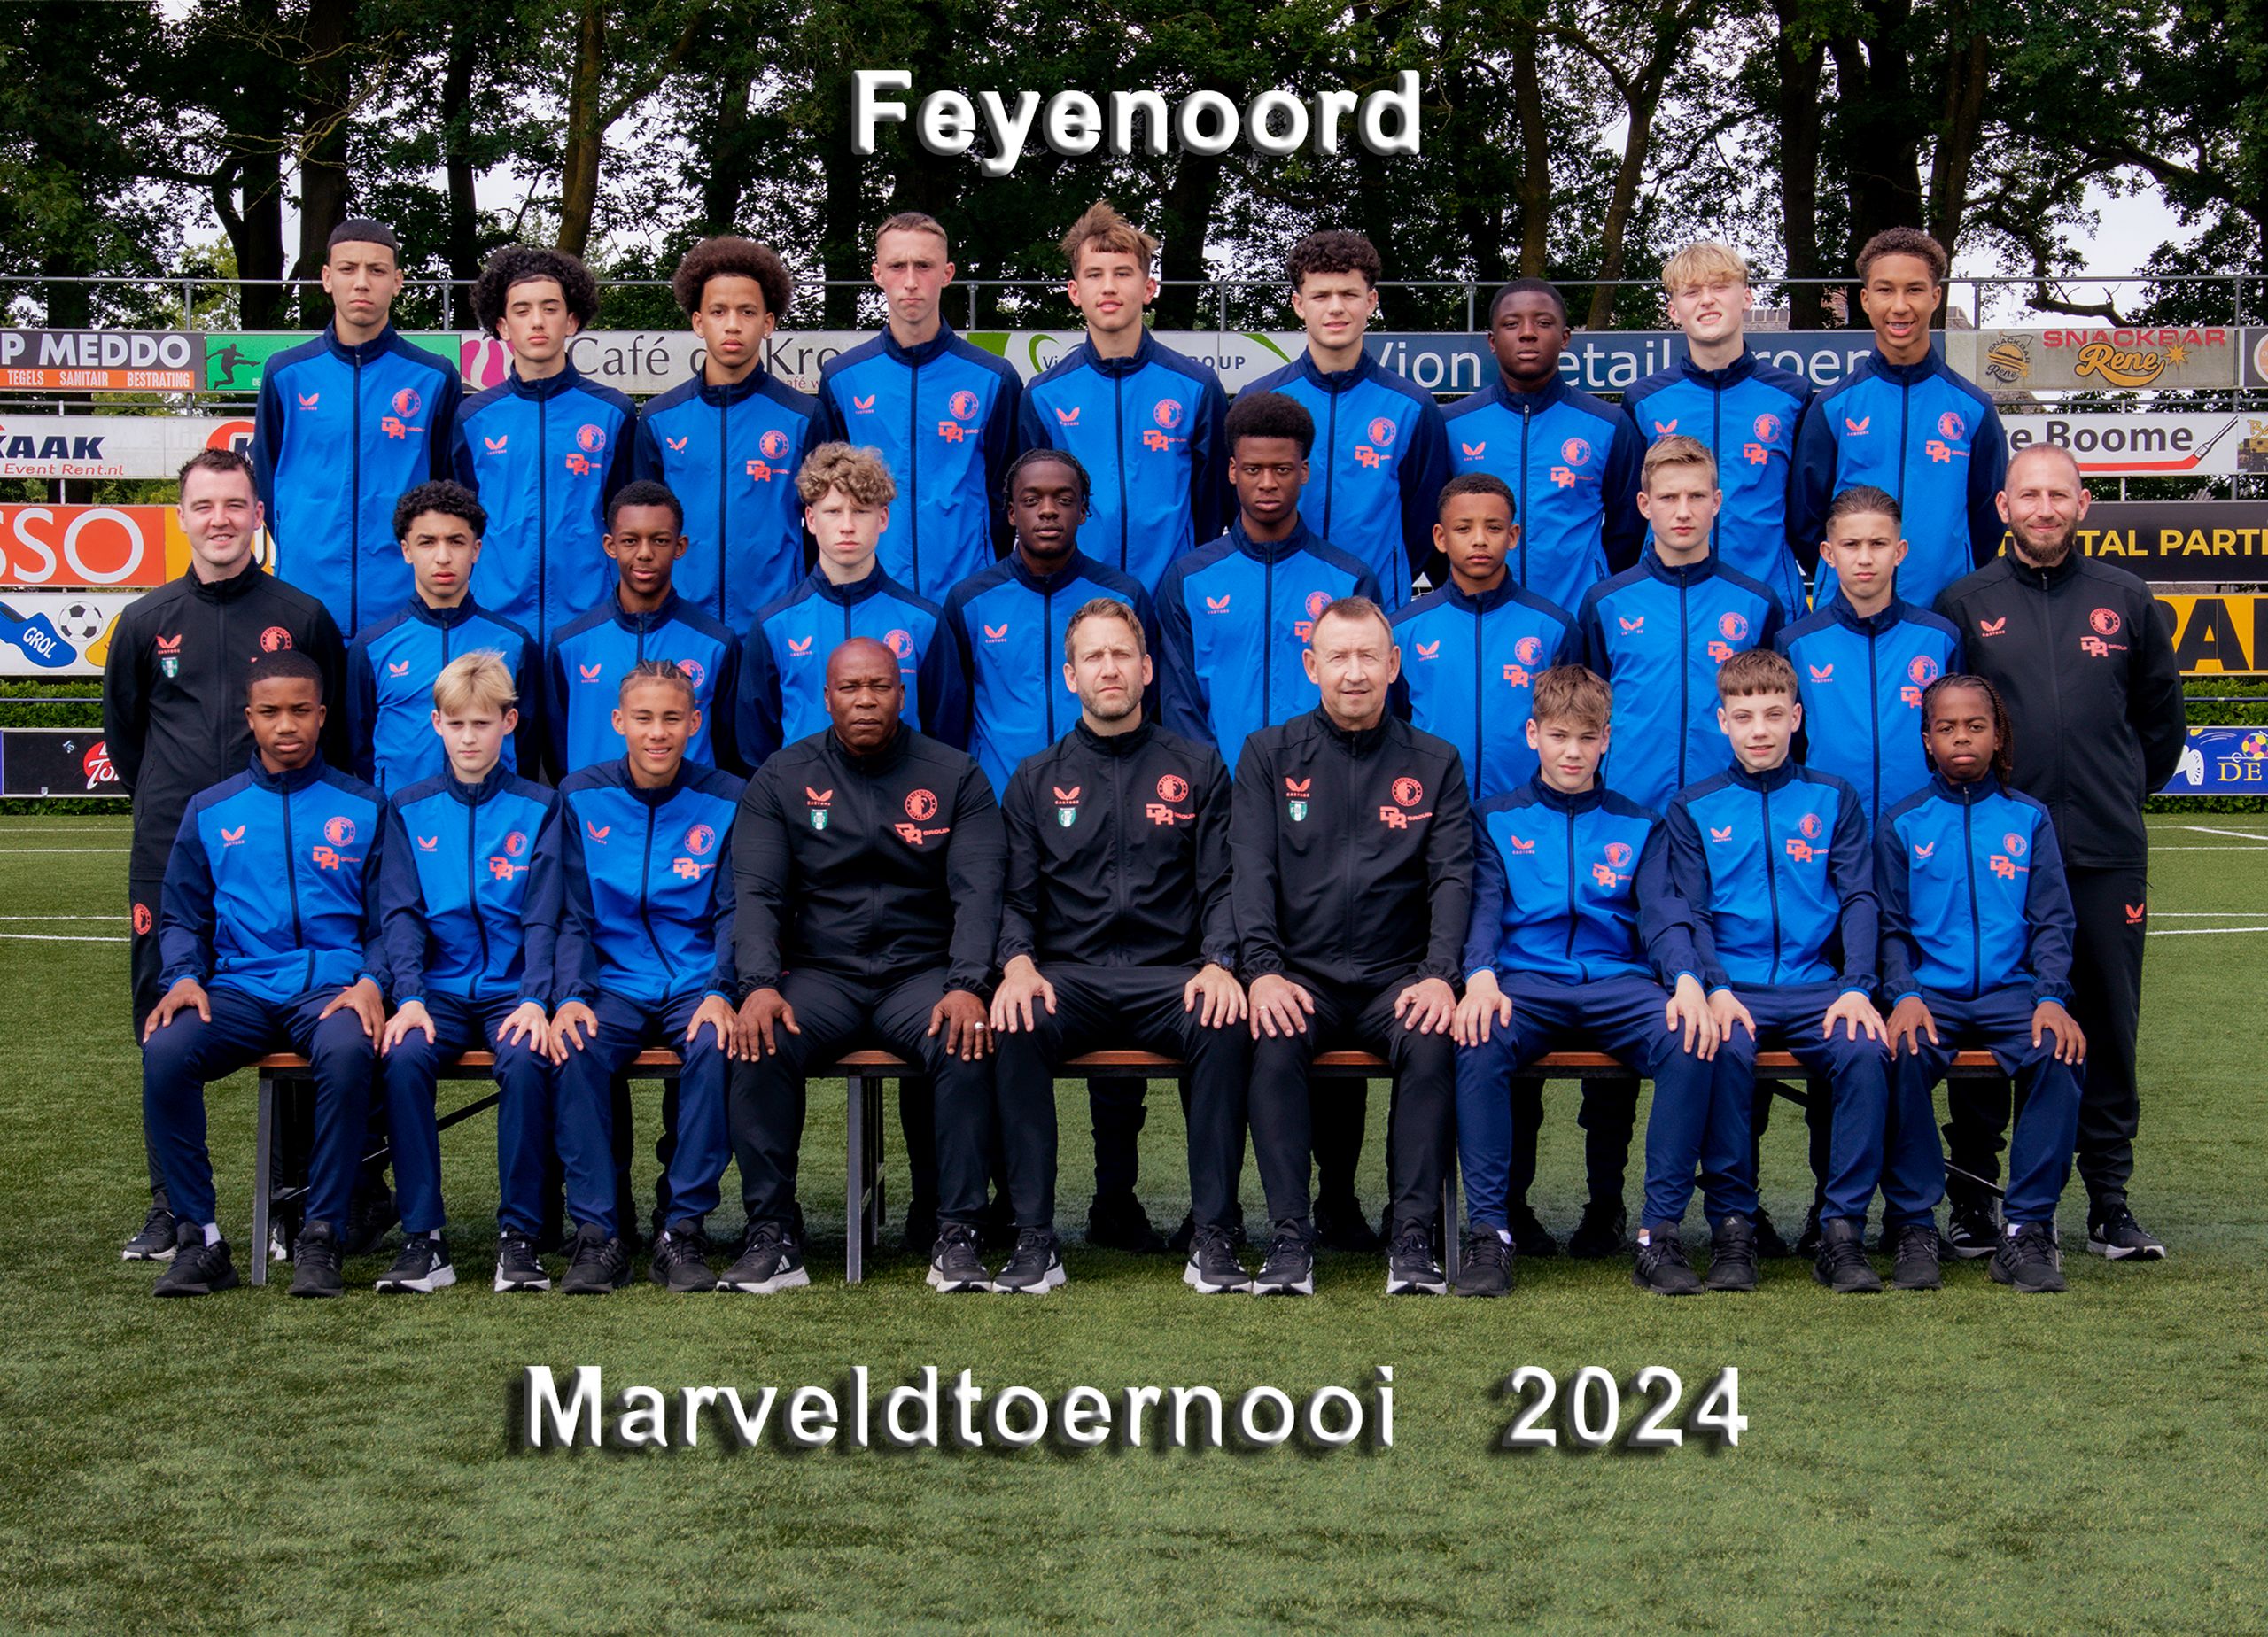 Marveld Tournament 2024 - Team Feyenoord